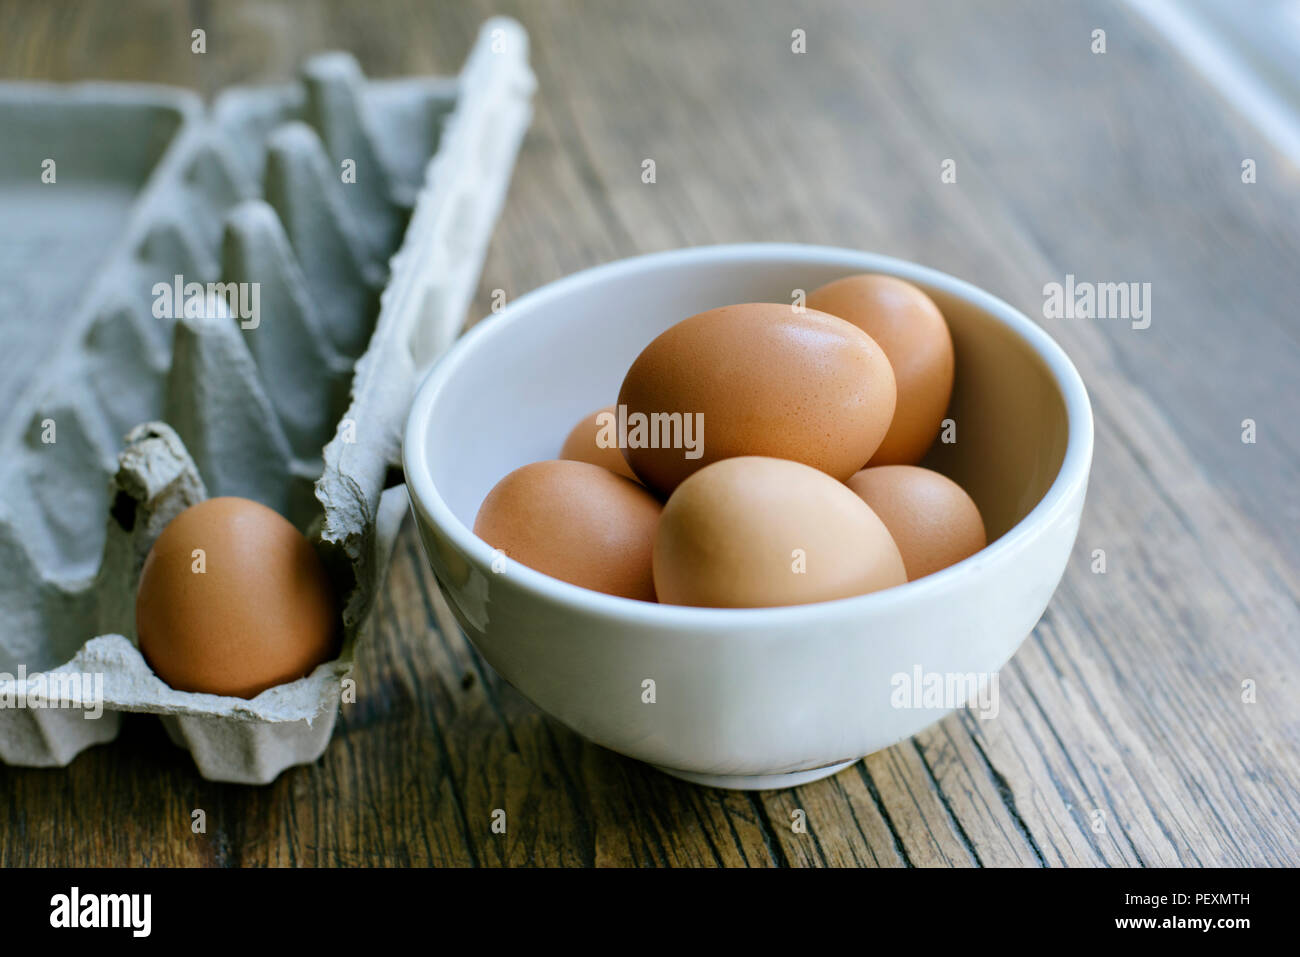 Fresh eggs in a bowl with a near empty carton Stock Photo